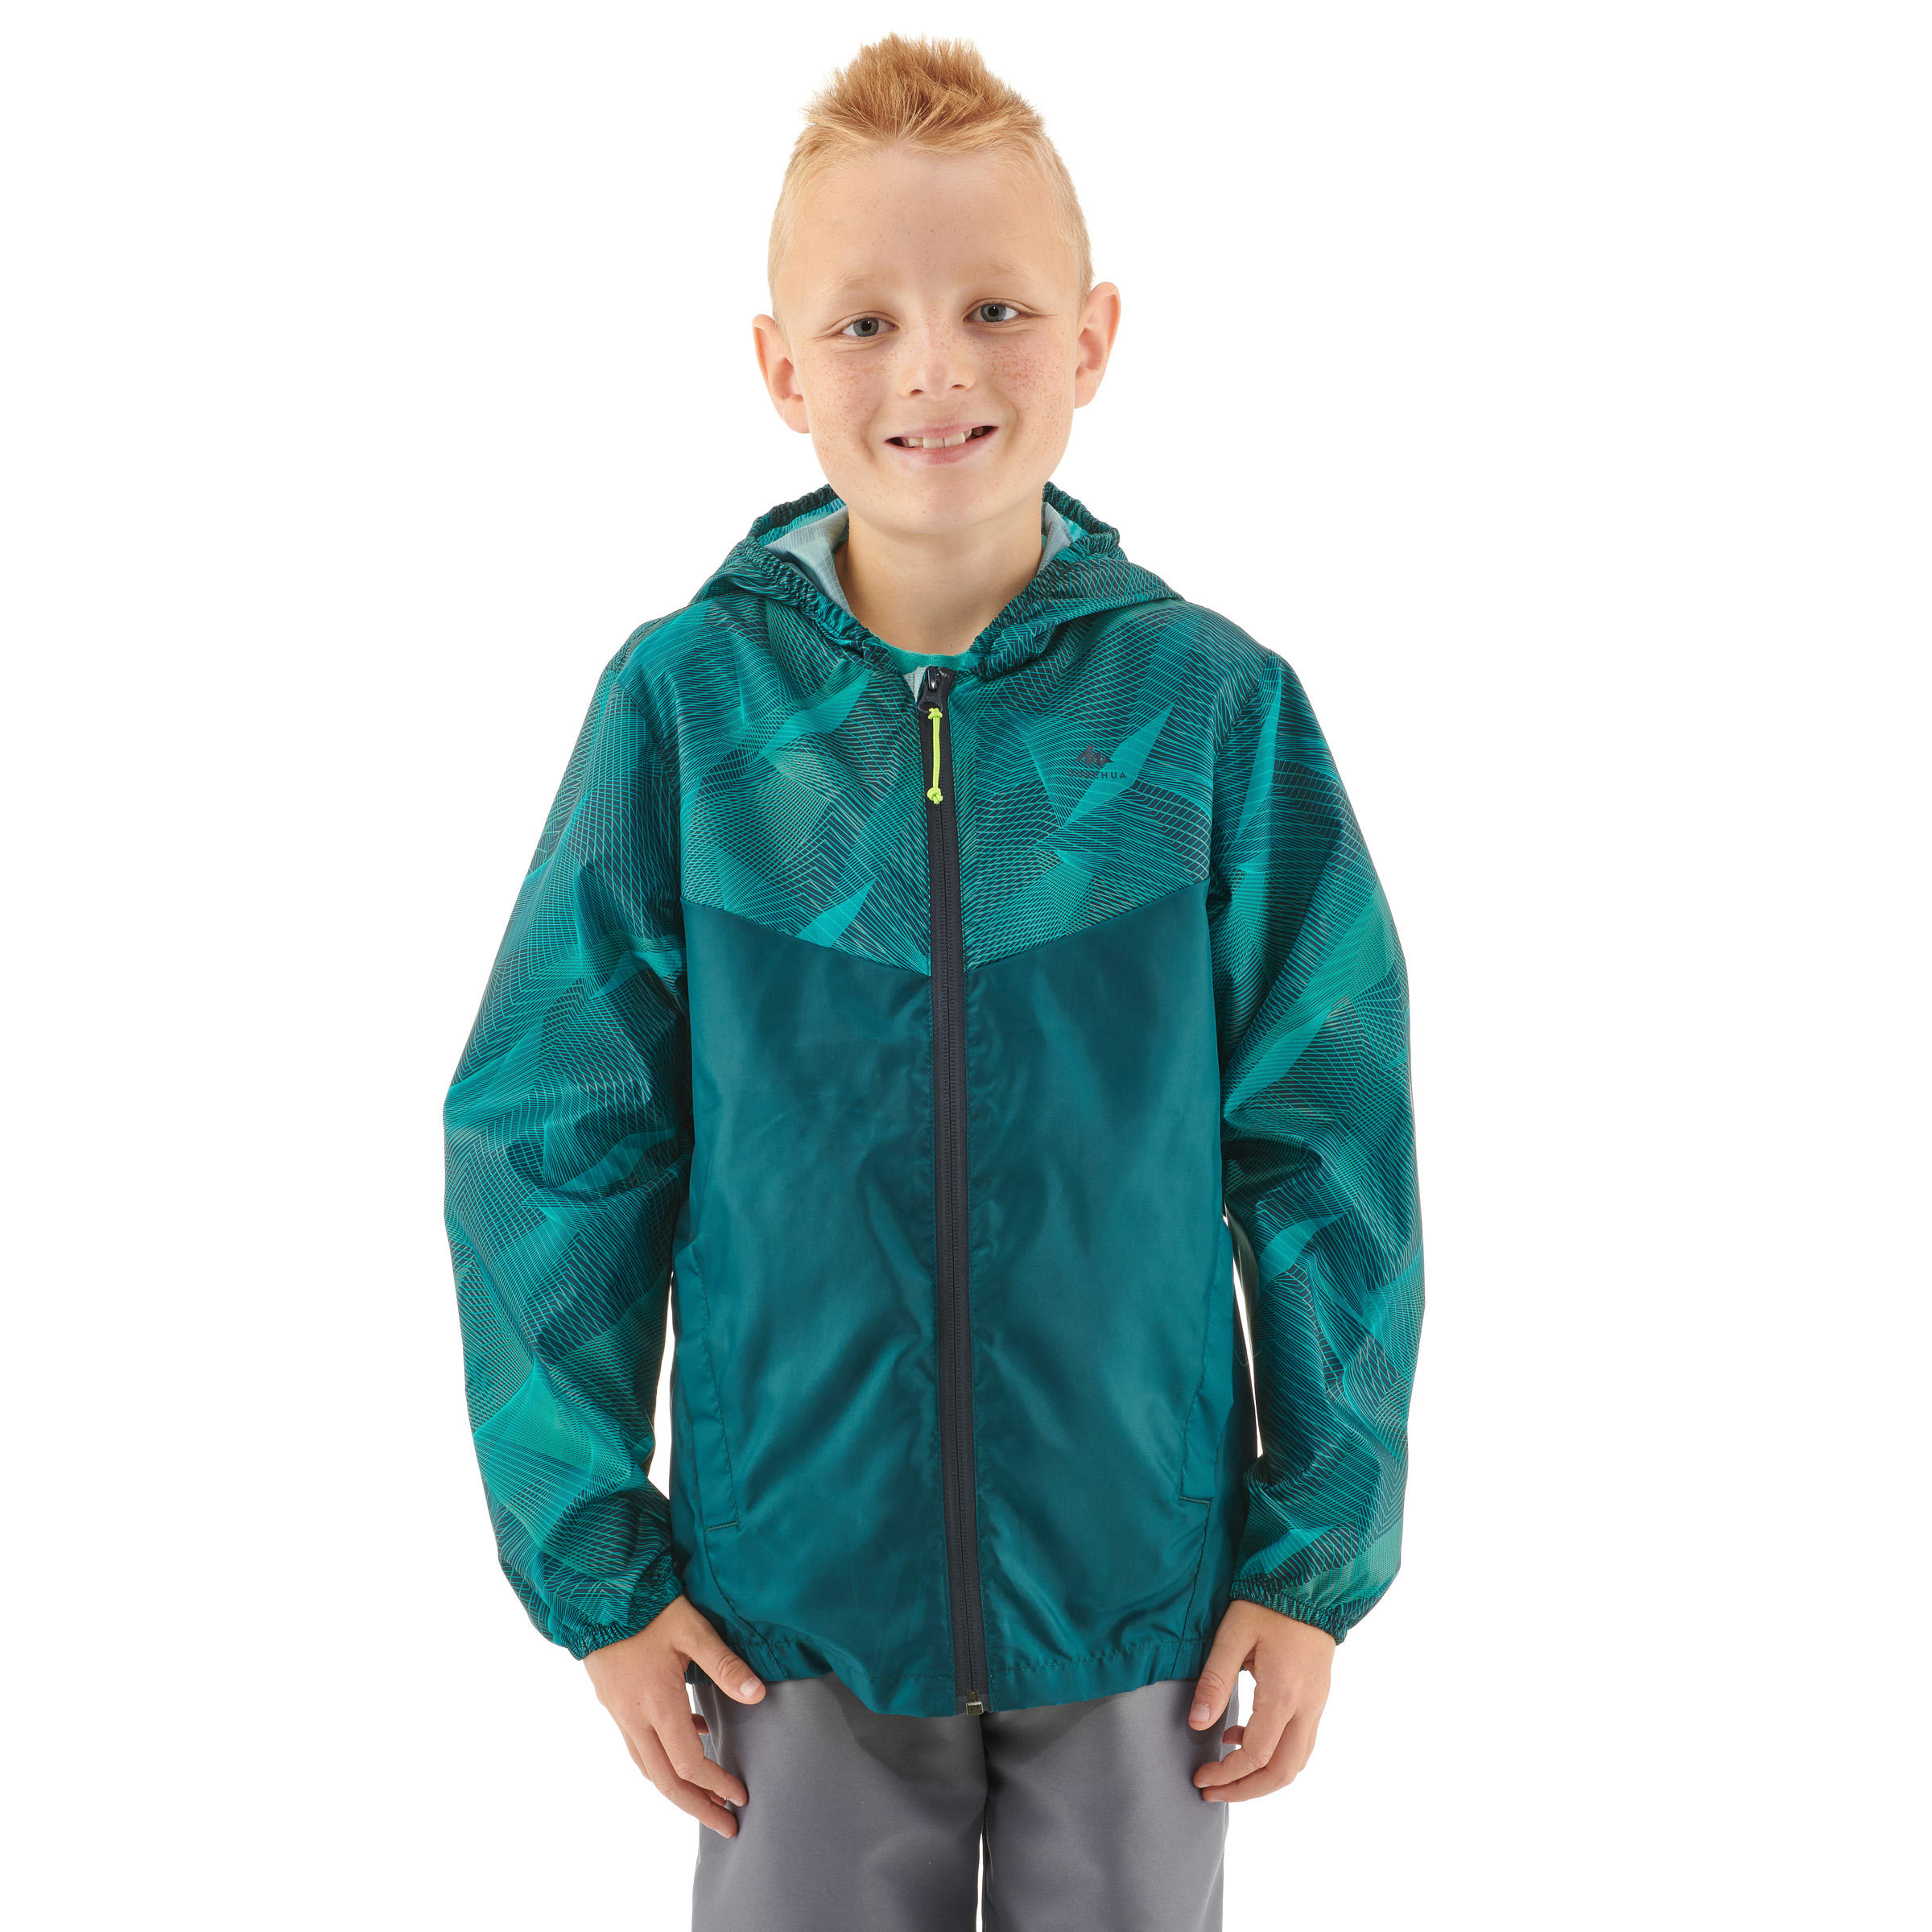 Kid's Raincoat MH150 (Age 7 to 15 Years) - Turquoise Print